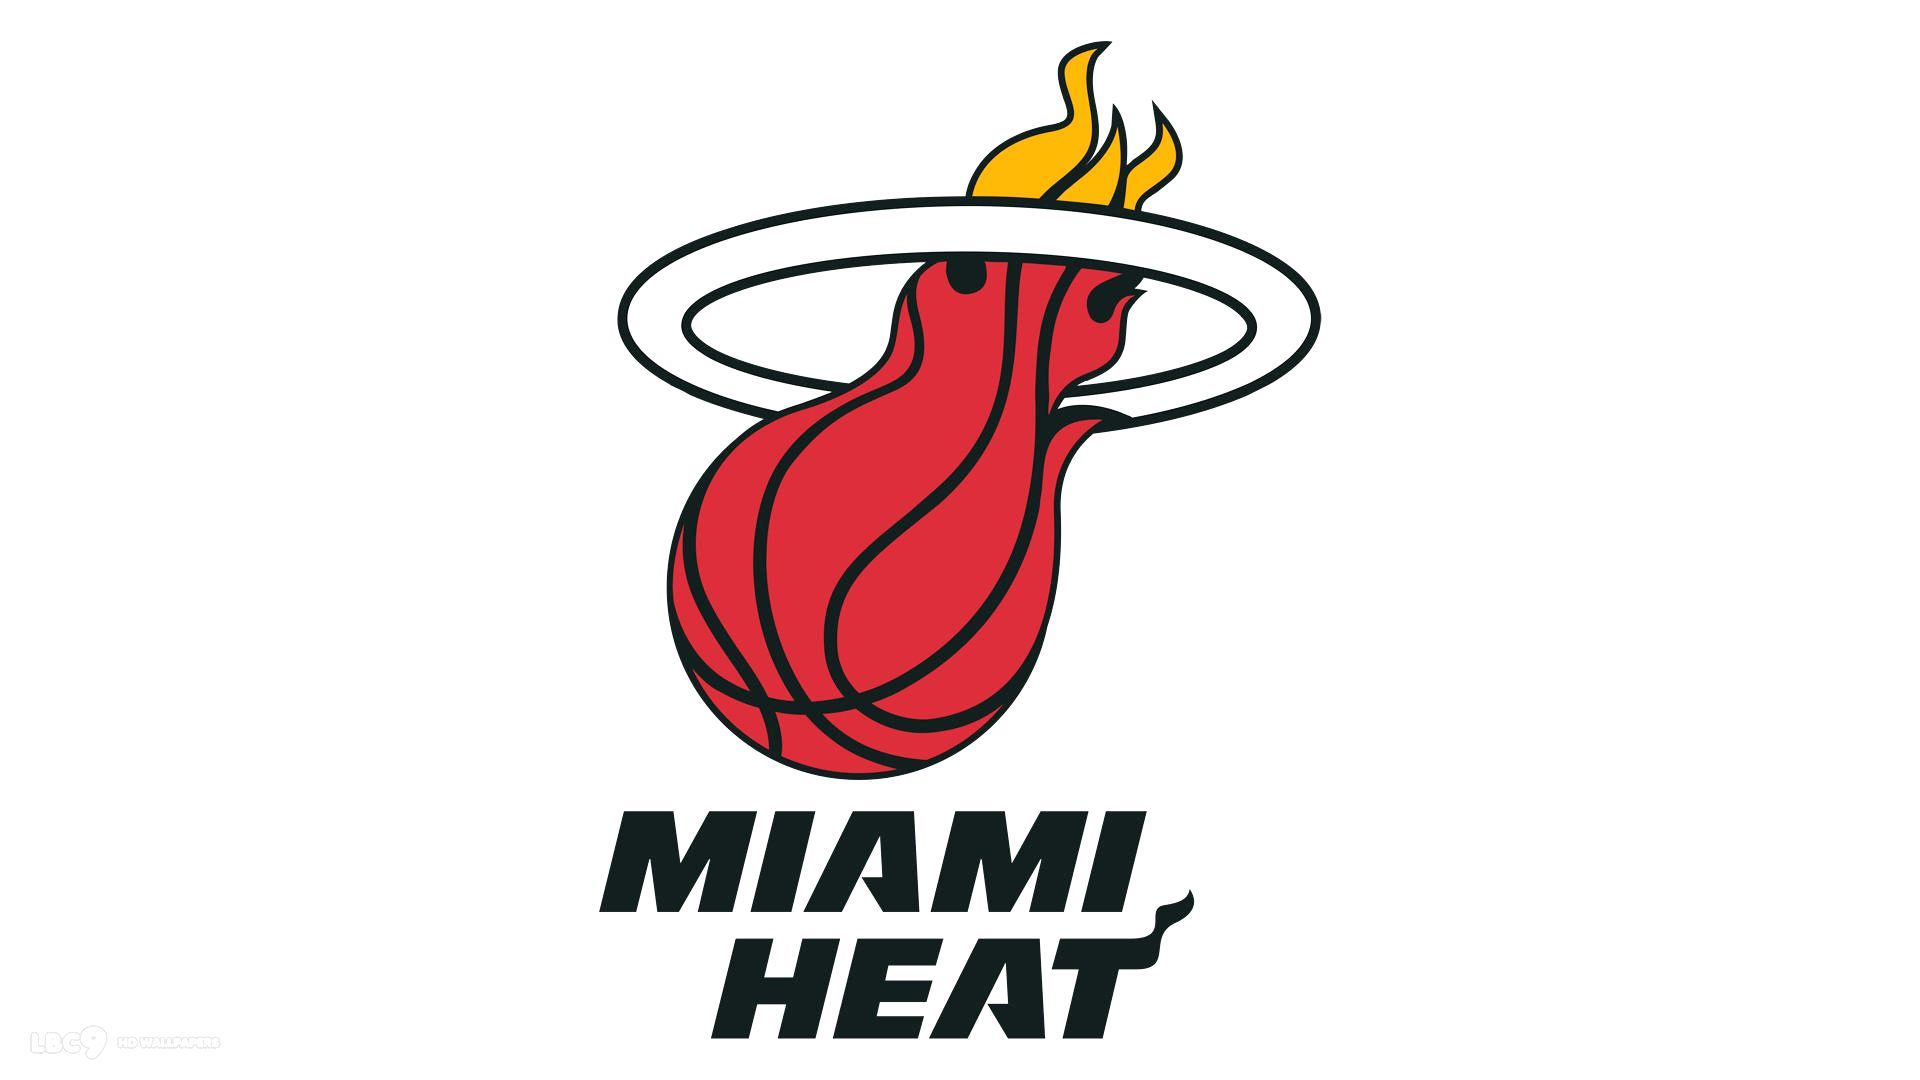 Miami Heat Logo Wallpaper Hd - 1920x1080 Wallpaper 